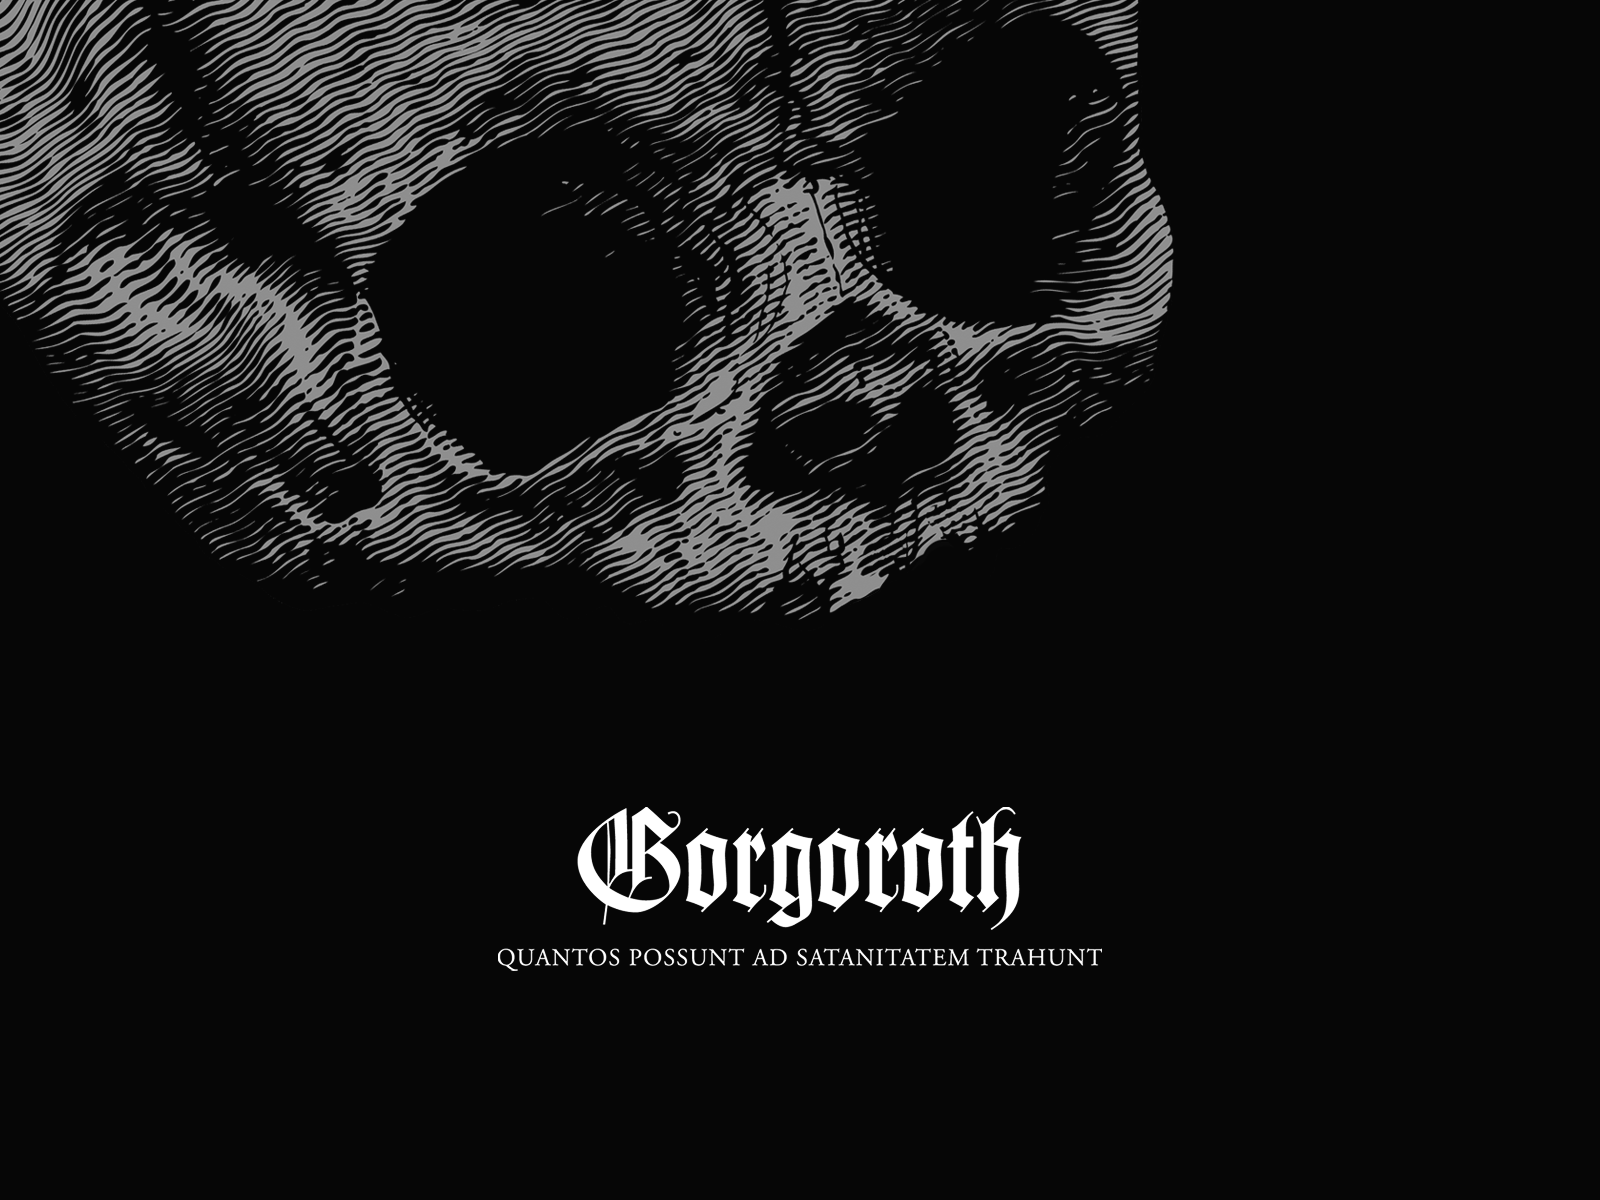 Gorgoroth Wallpaper - Gorgoroth Quantos Possunt Ad Satanitatem Trahunt , HD Wallpaper & Backgrounds